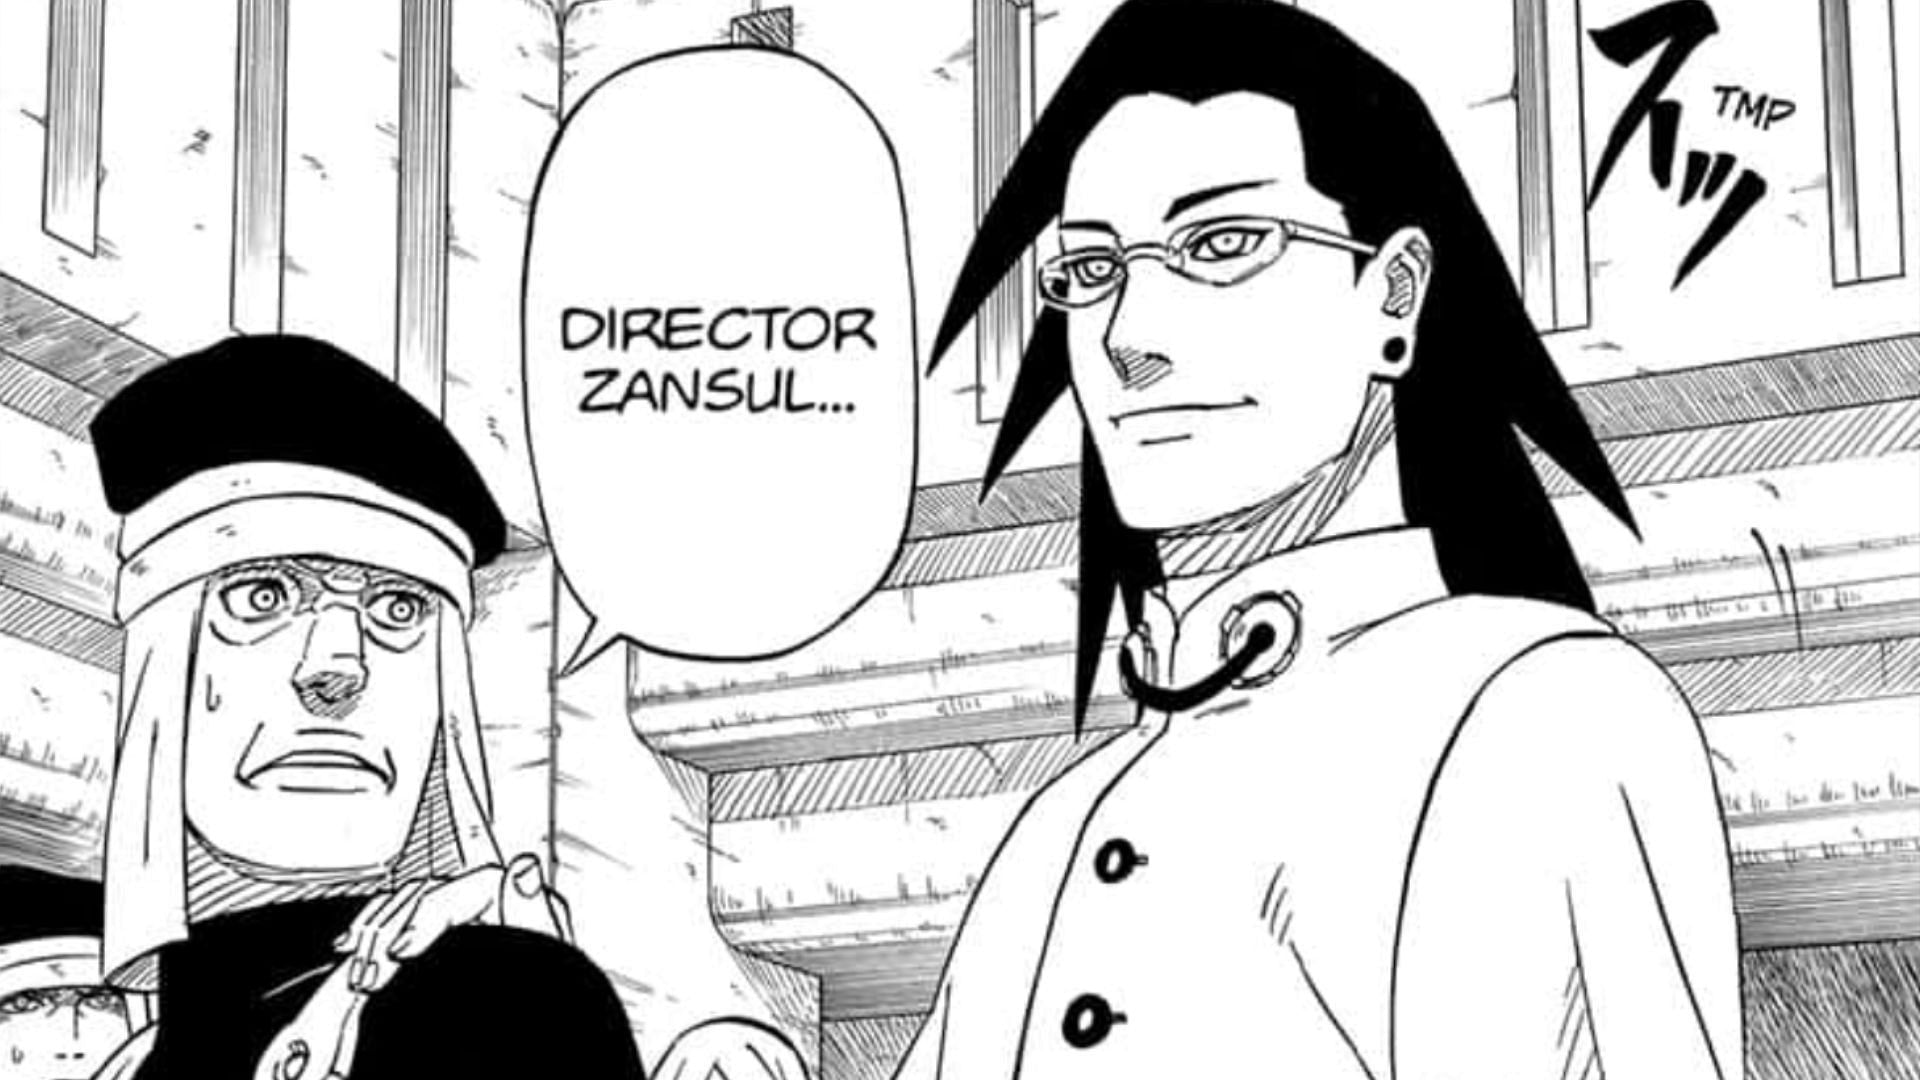 Director Zansul makes his first appearance in Sasuke Retsuden (Image via MangaPlus)